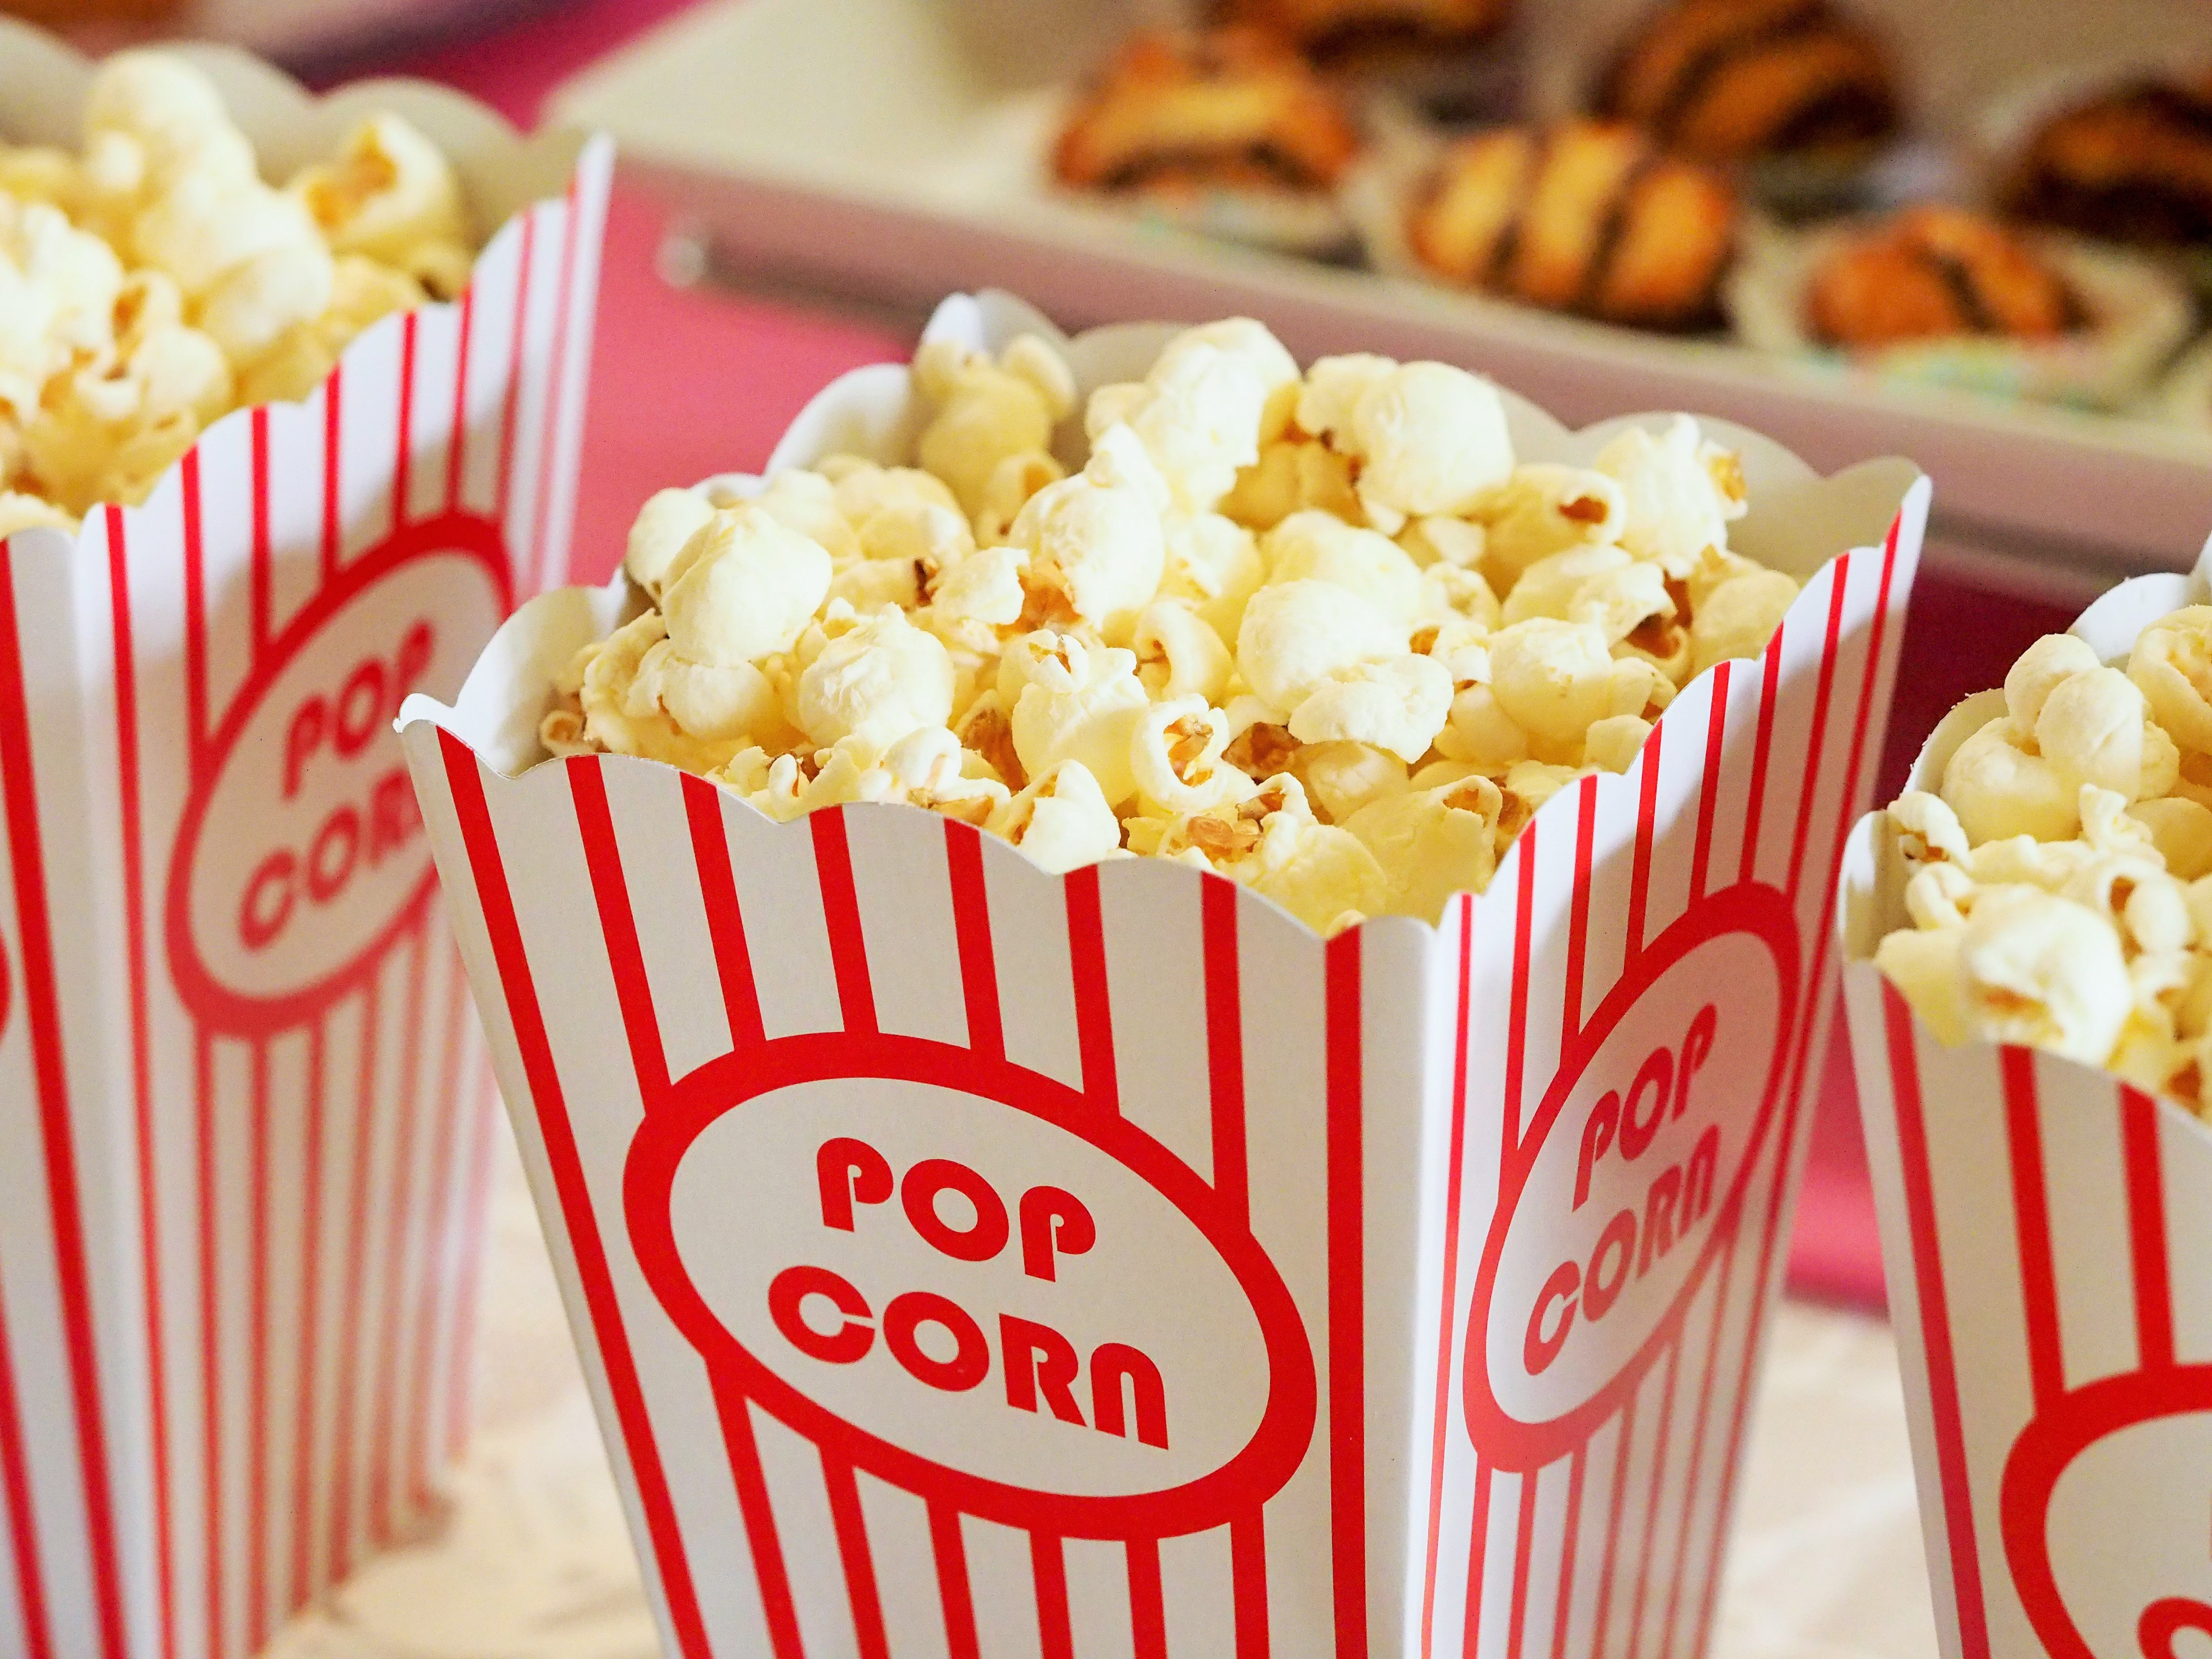 Picture of movie popcorn